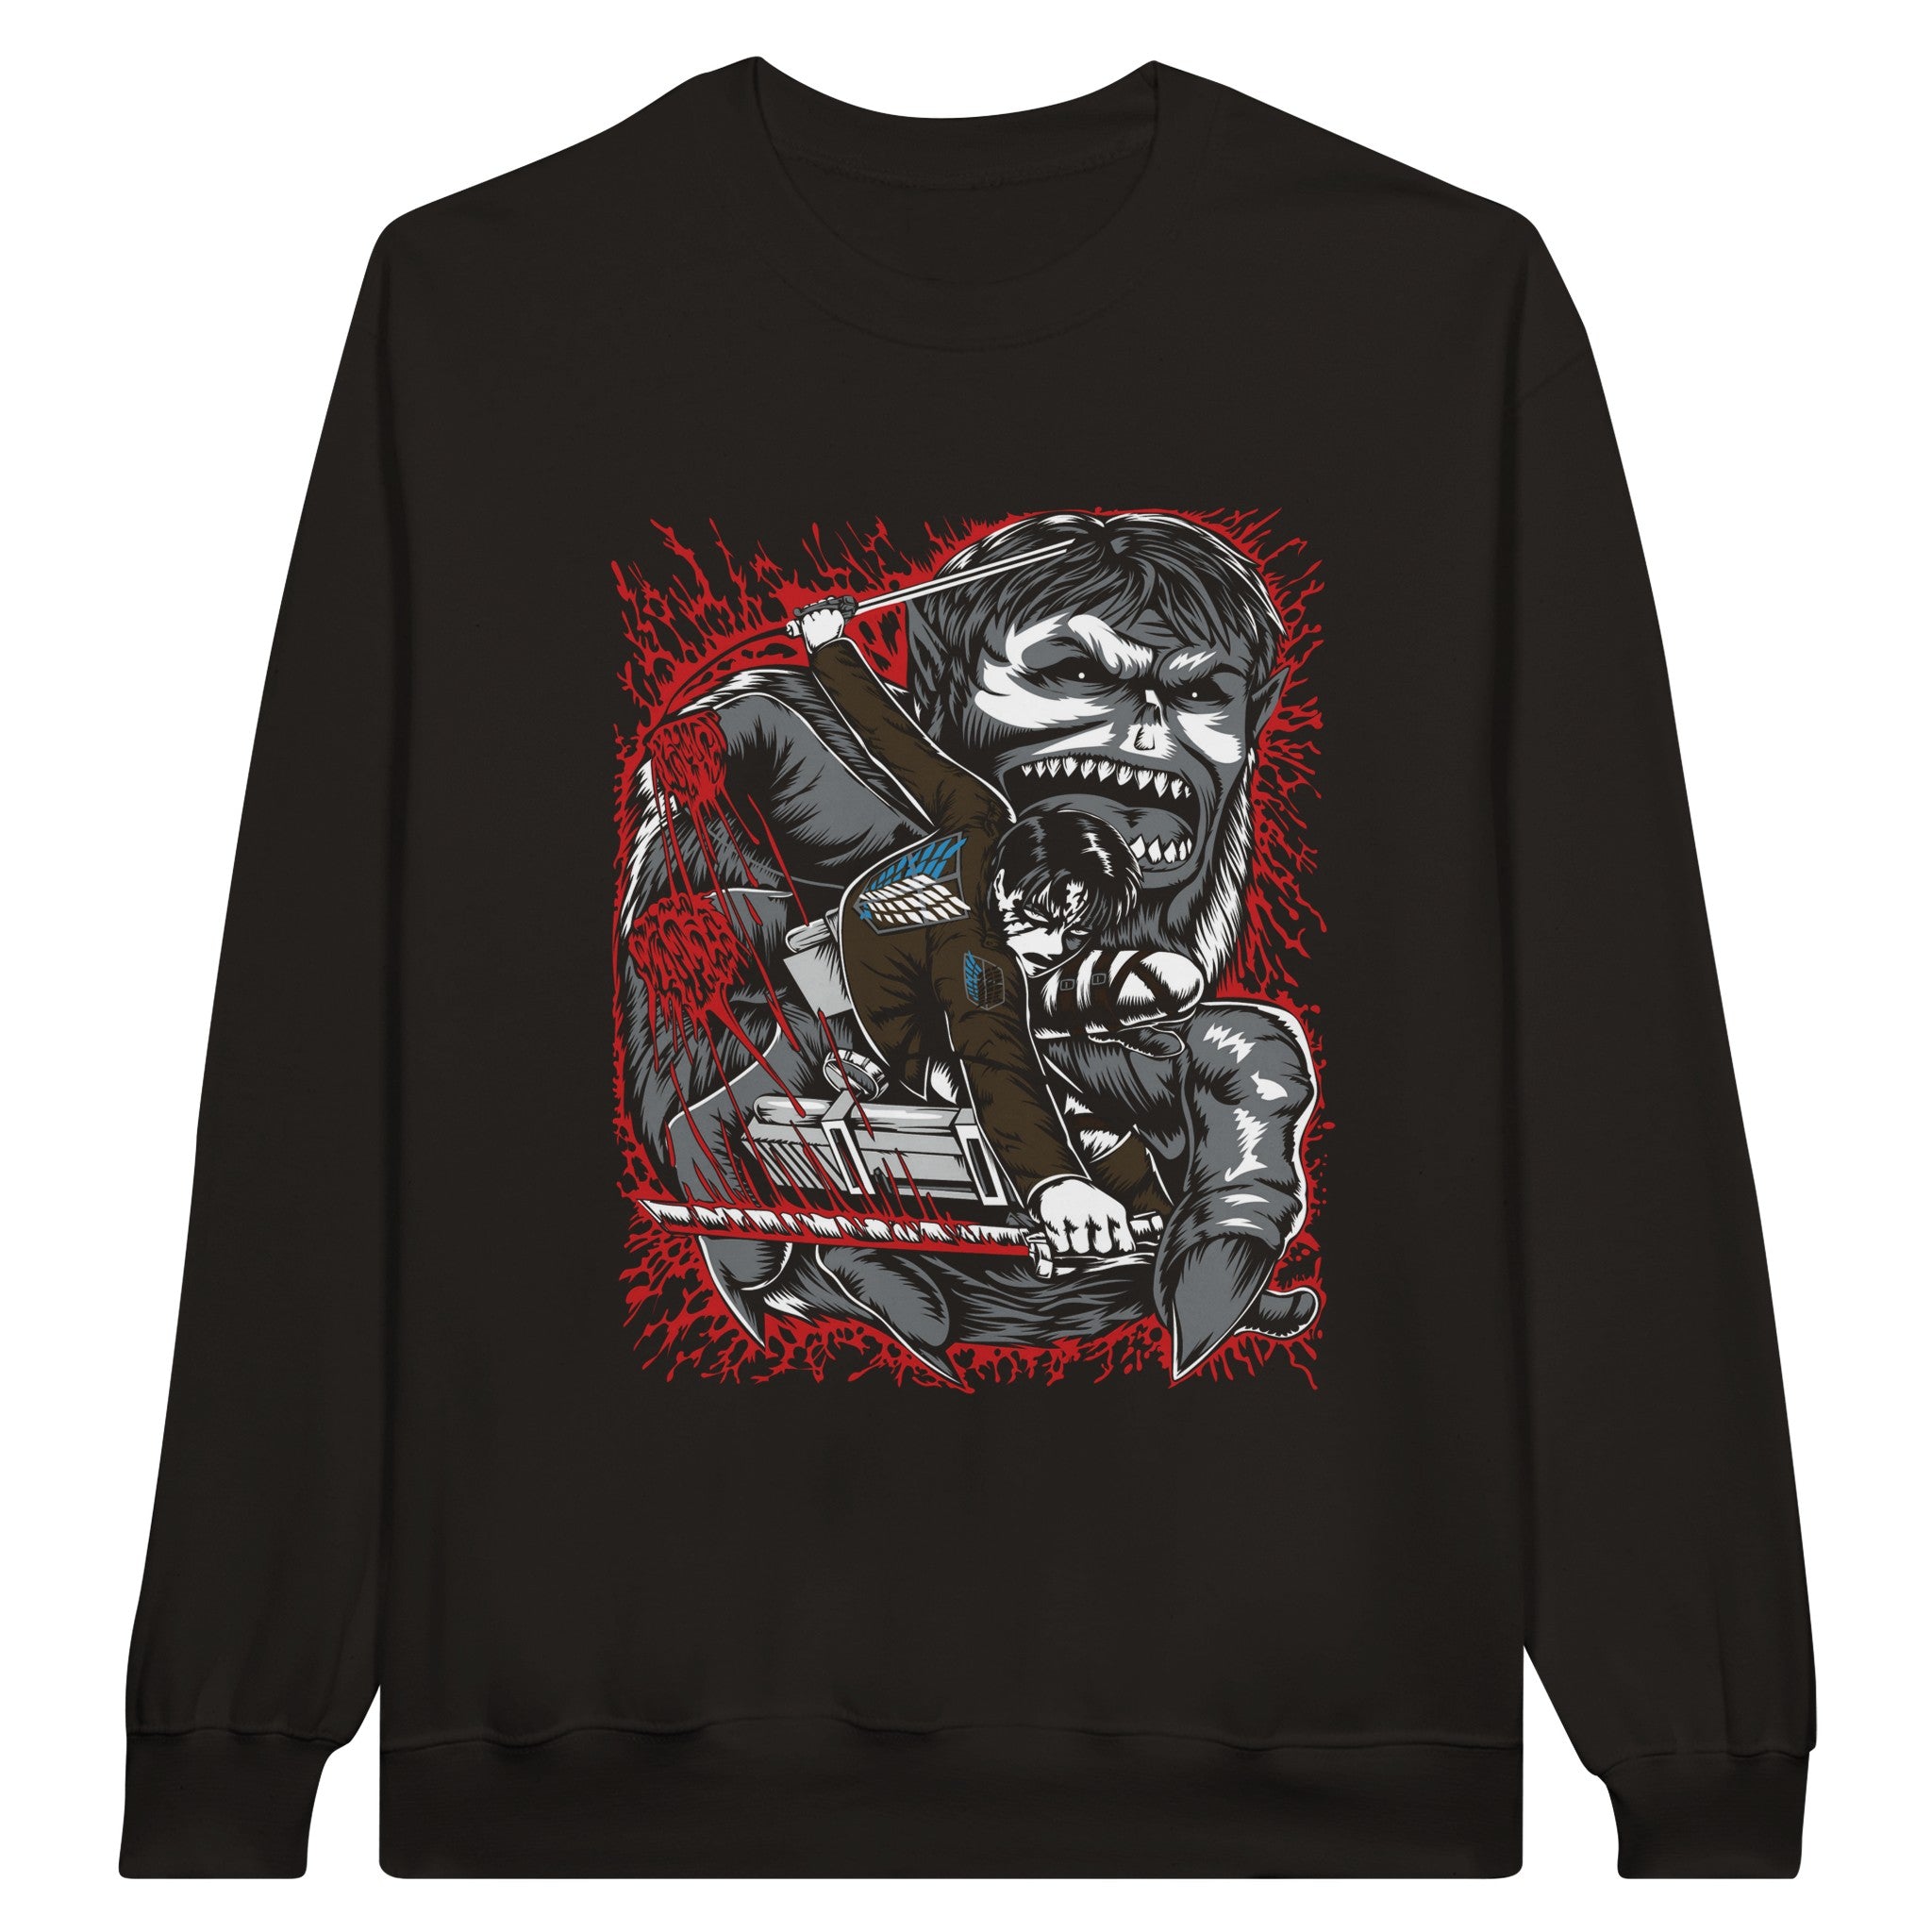 shop and buy attack on titan anime clothing levi vs beast titan sweatshirt/jumper/longsleeve